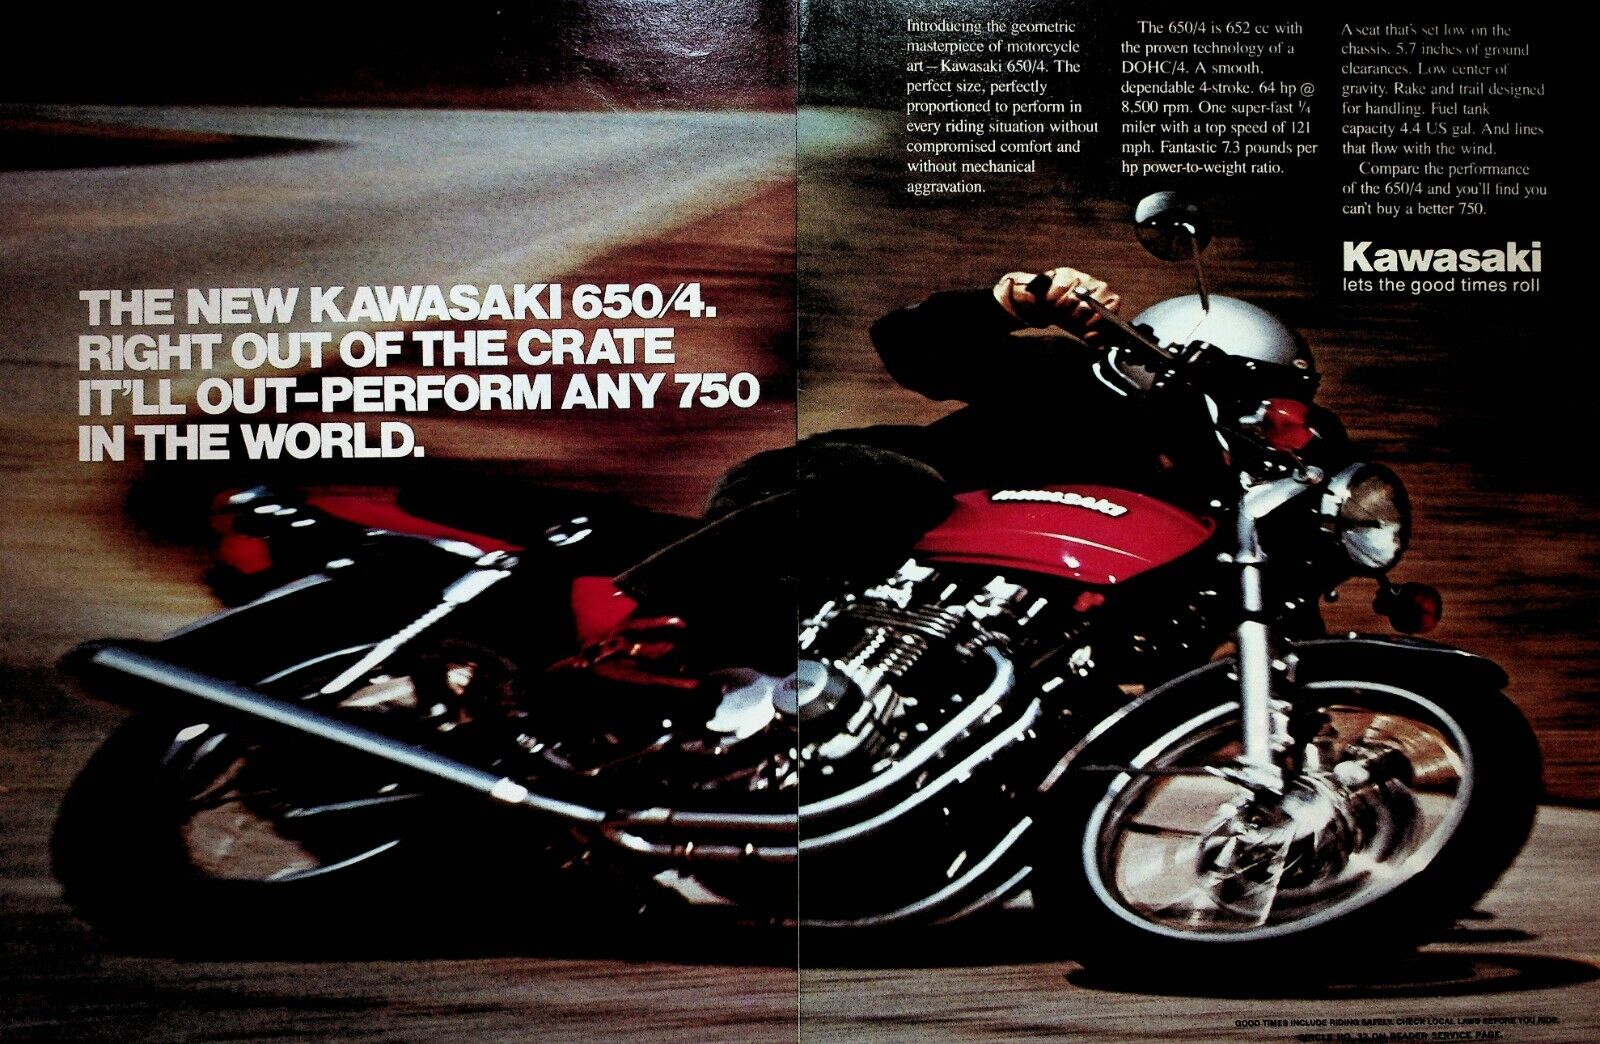 1976 Kawasaki 650 4 Four - 2-Page Vintage Motorcycle Ad